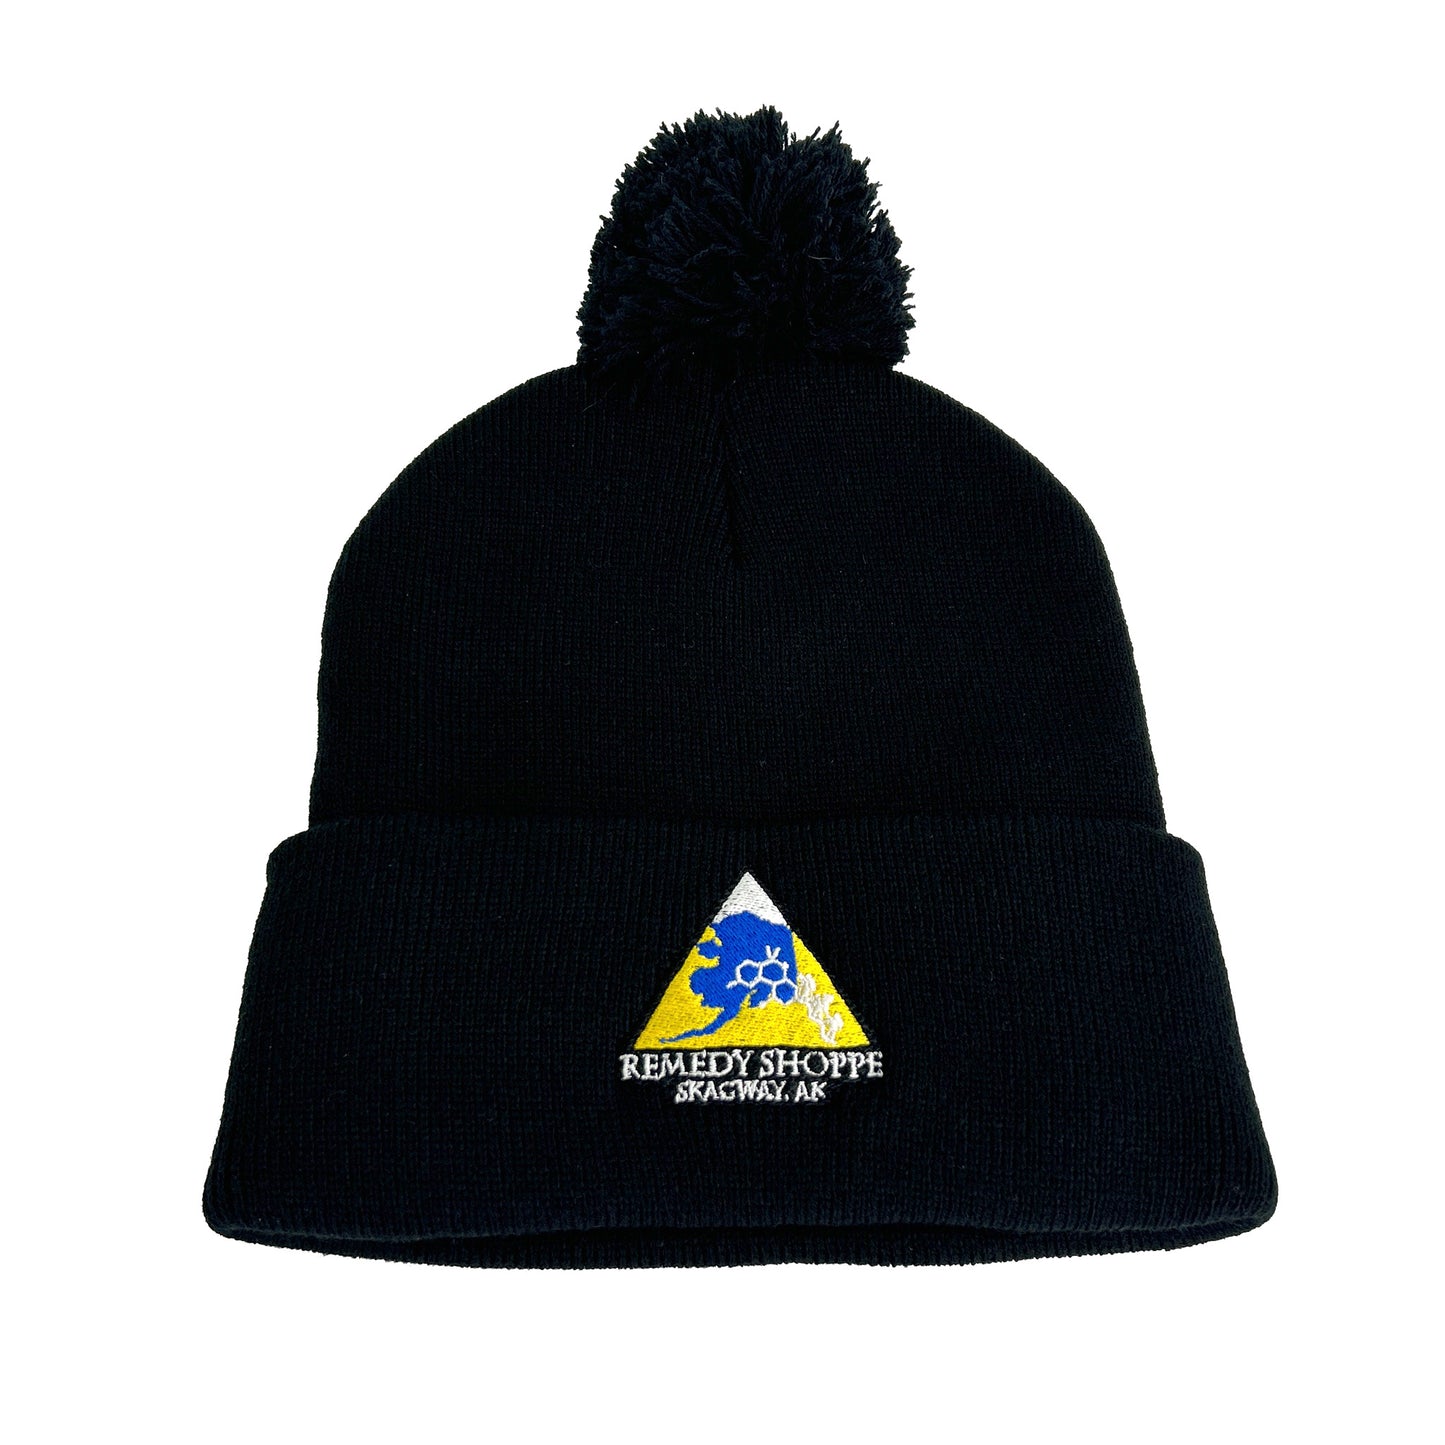 Remedy Shoppe Knit Hat with Logo